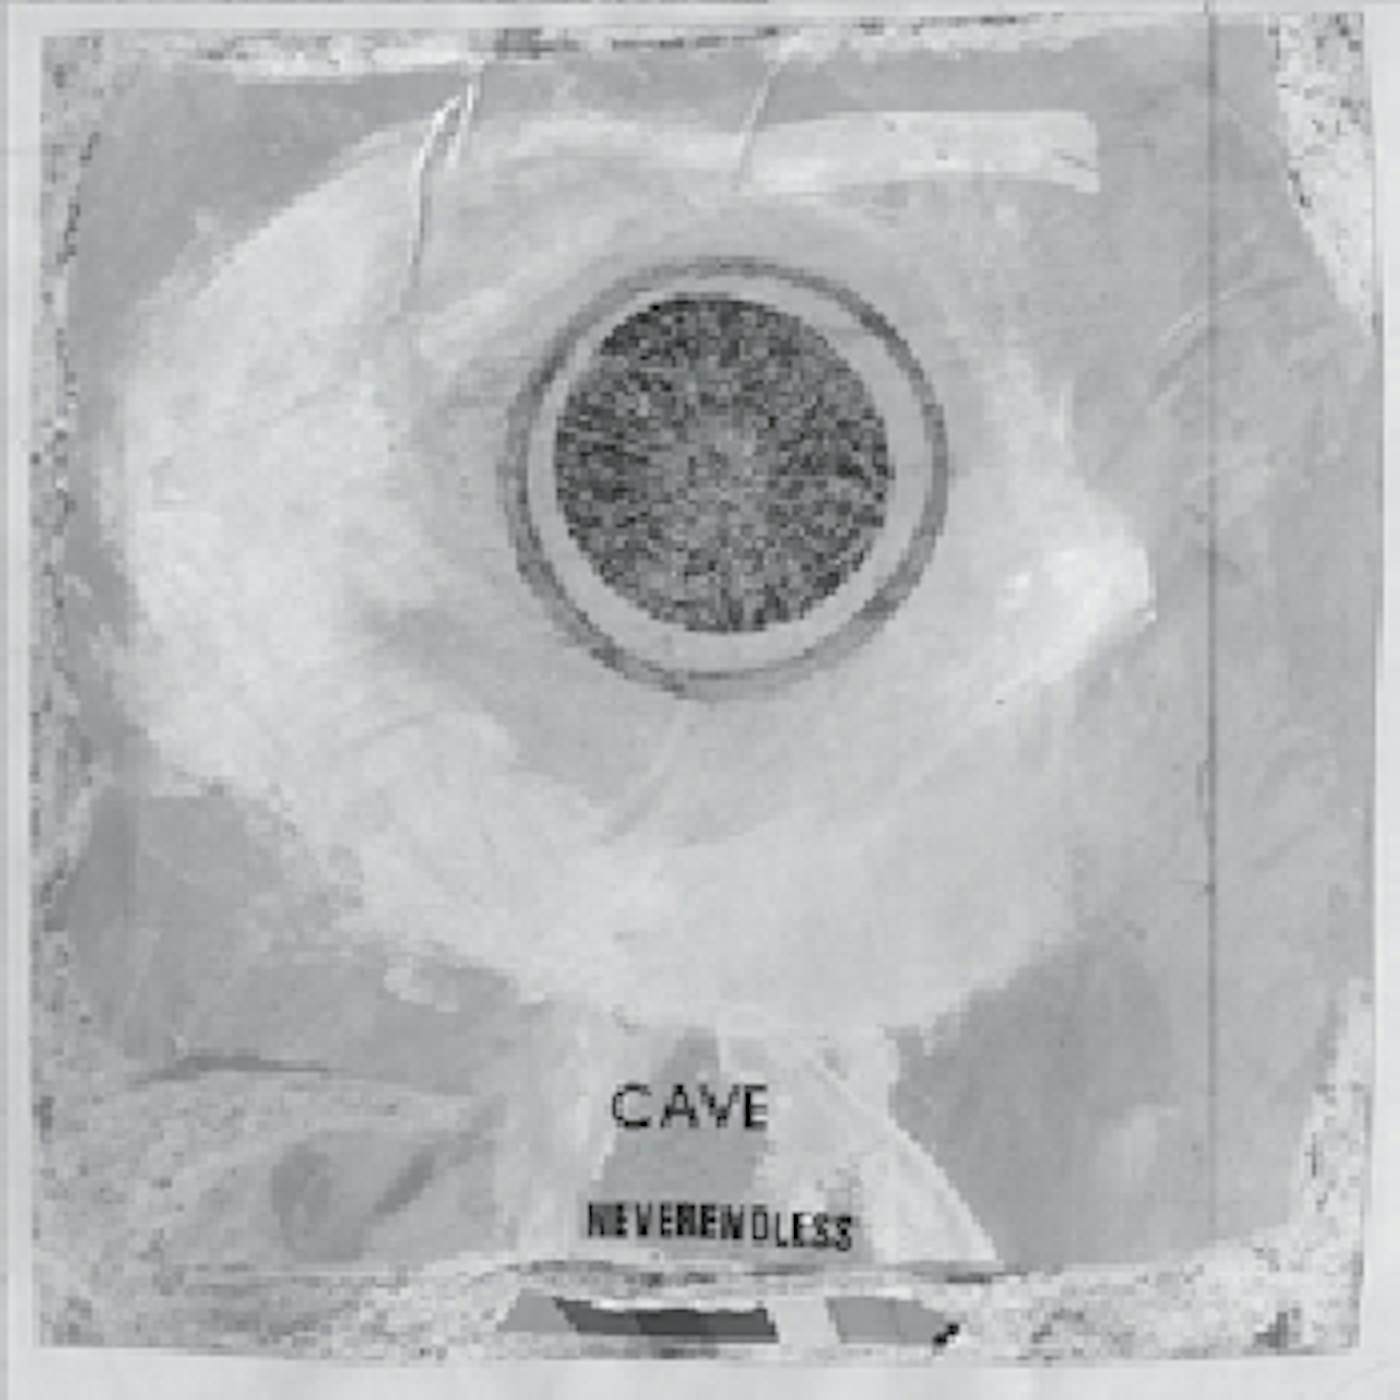 Cave Neverendless Vinyl Record